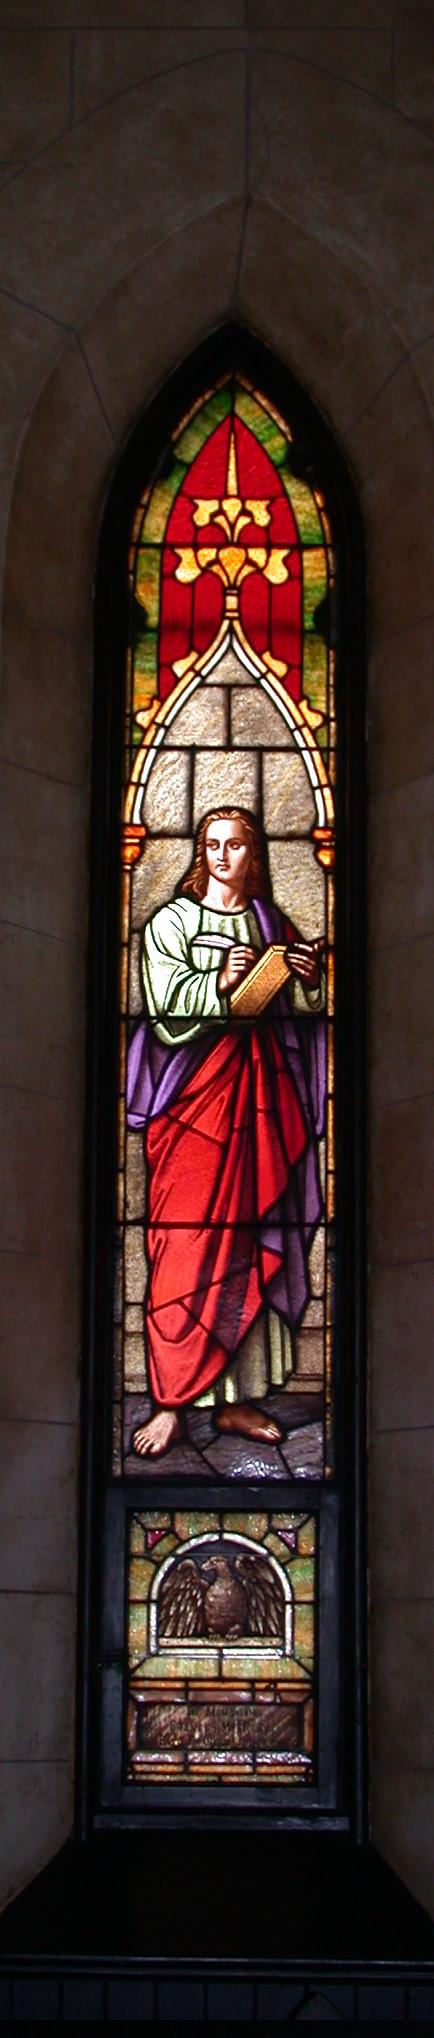 St. John Window